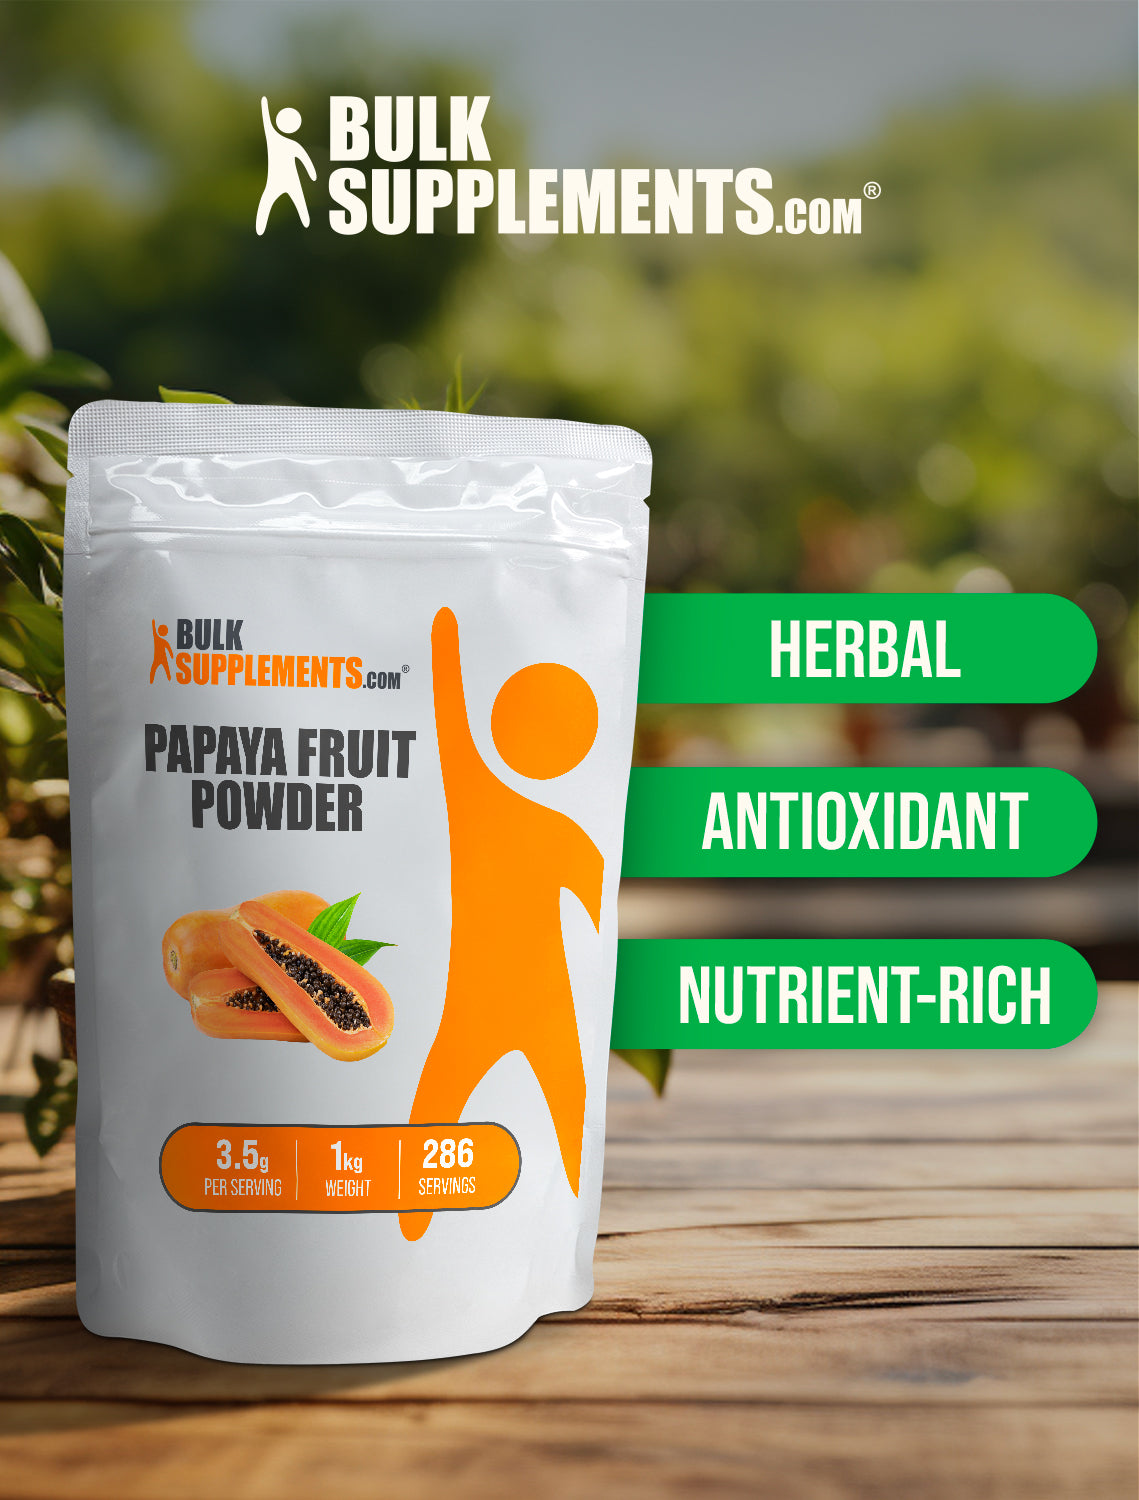 Papaya fruit powder 1kg keywords image